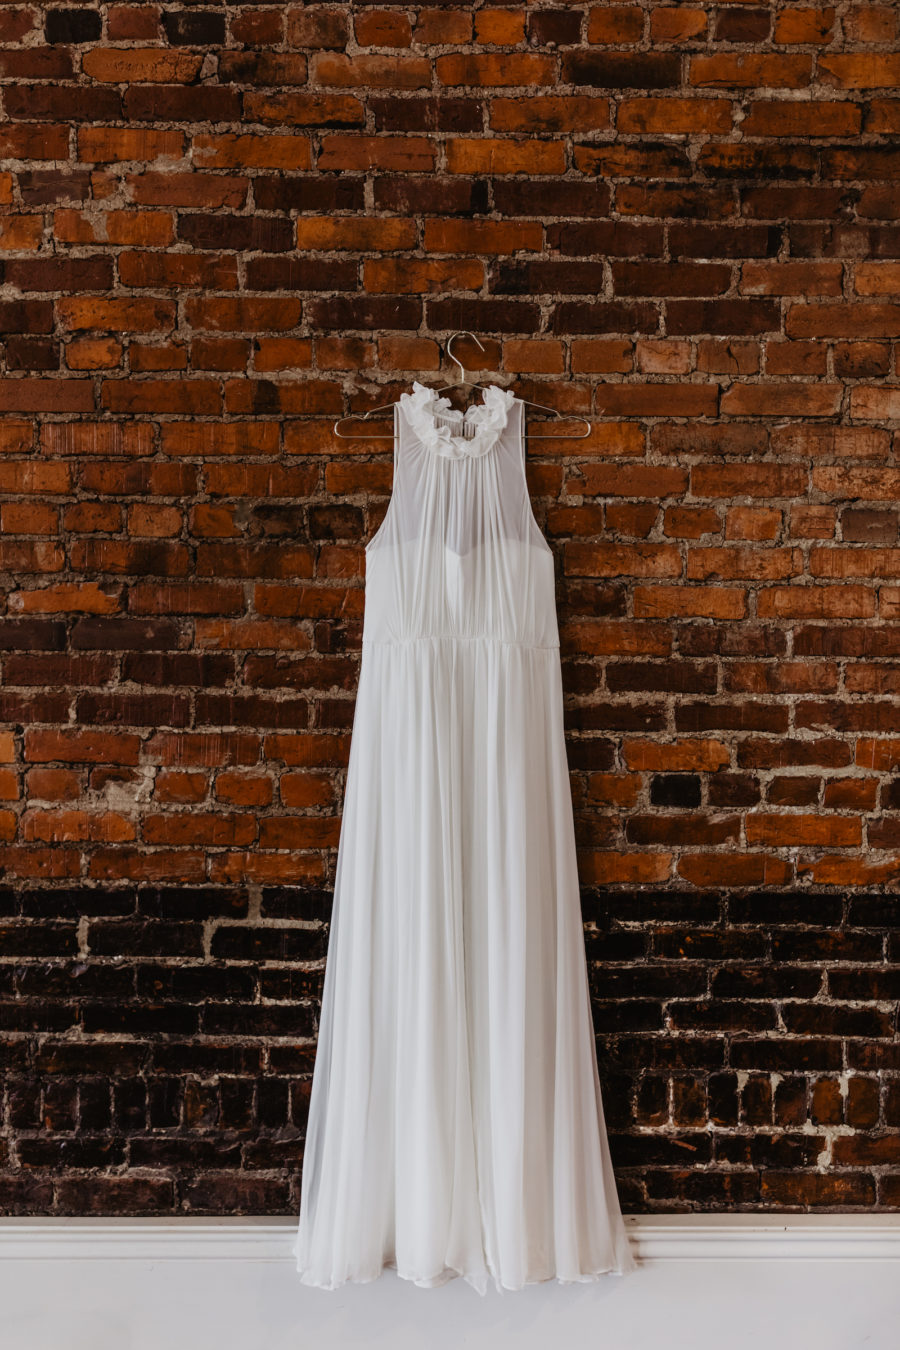 Elegant wedding dress for wedding styled shoot featured on Nashville Bride Guide